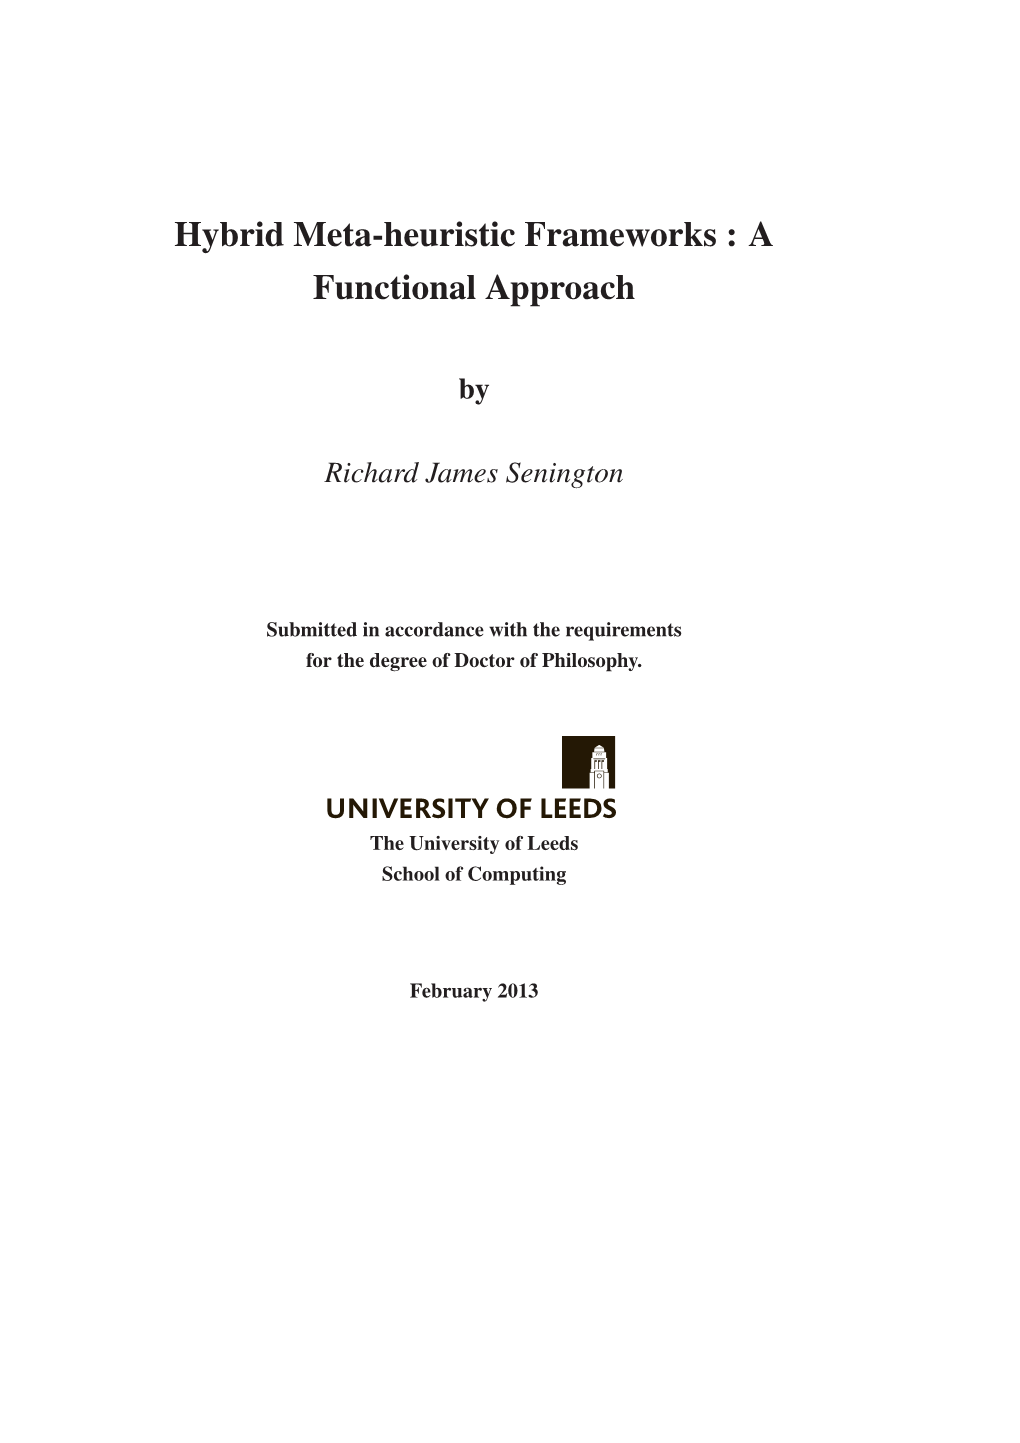 Hybrid Meta-Heuristic Frameworks : a Functional Approach